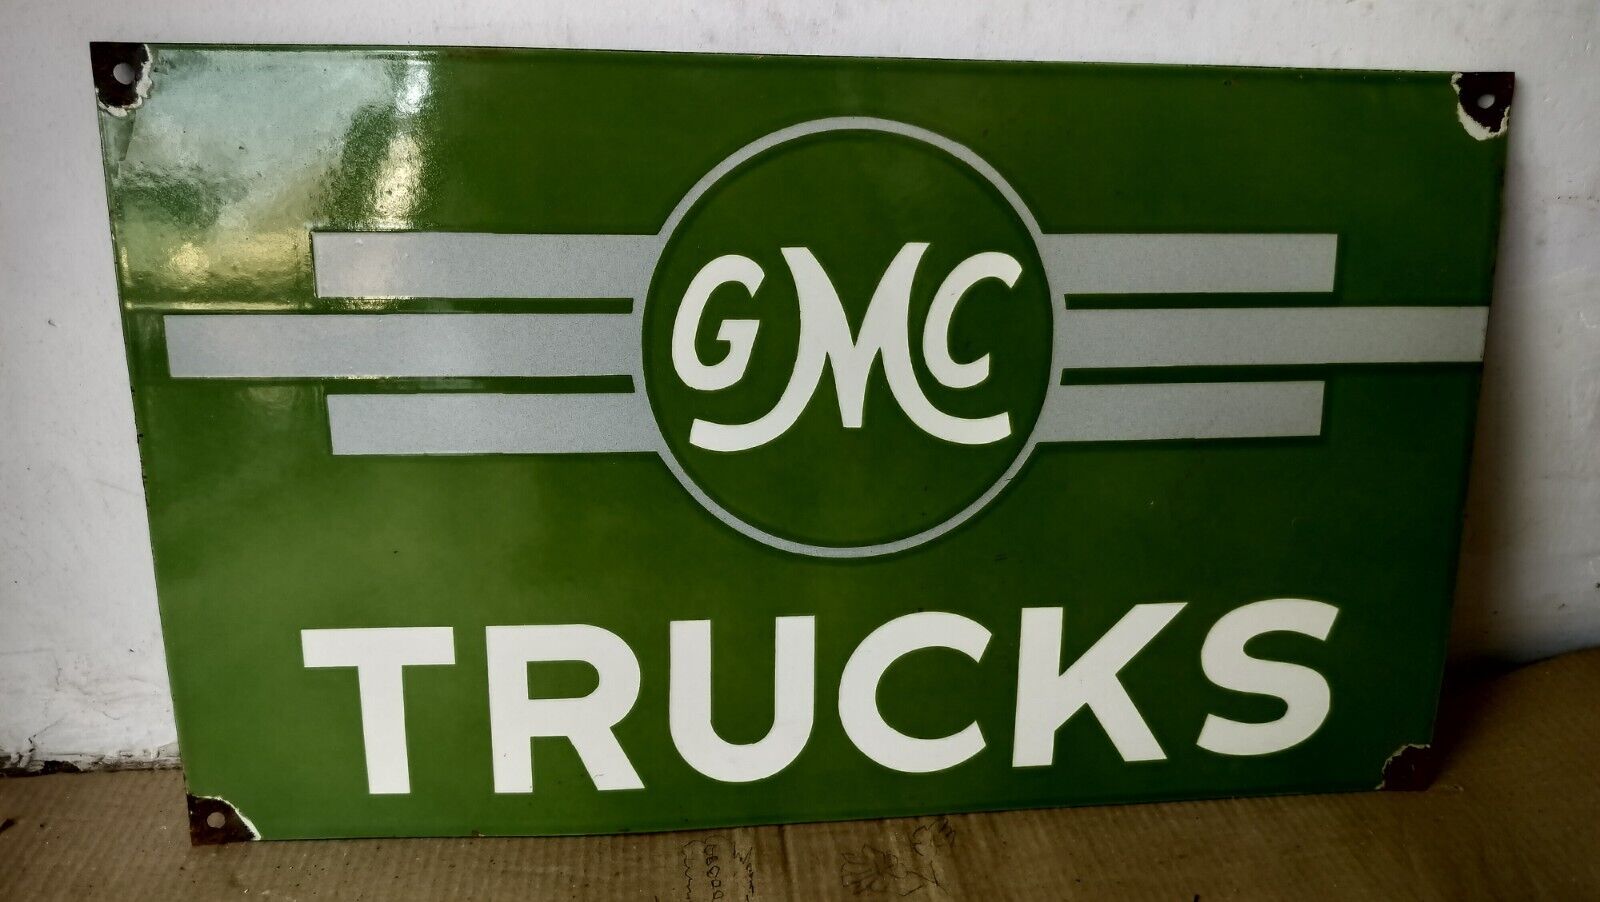 Gmc Trucks Porcelain Enamel Sign  24 x 14 Inches